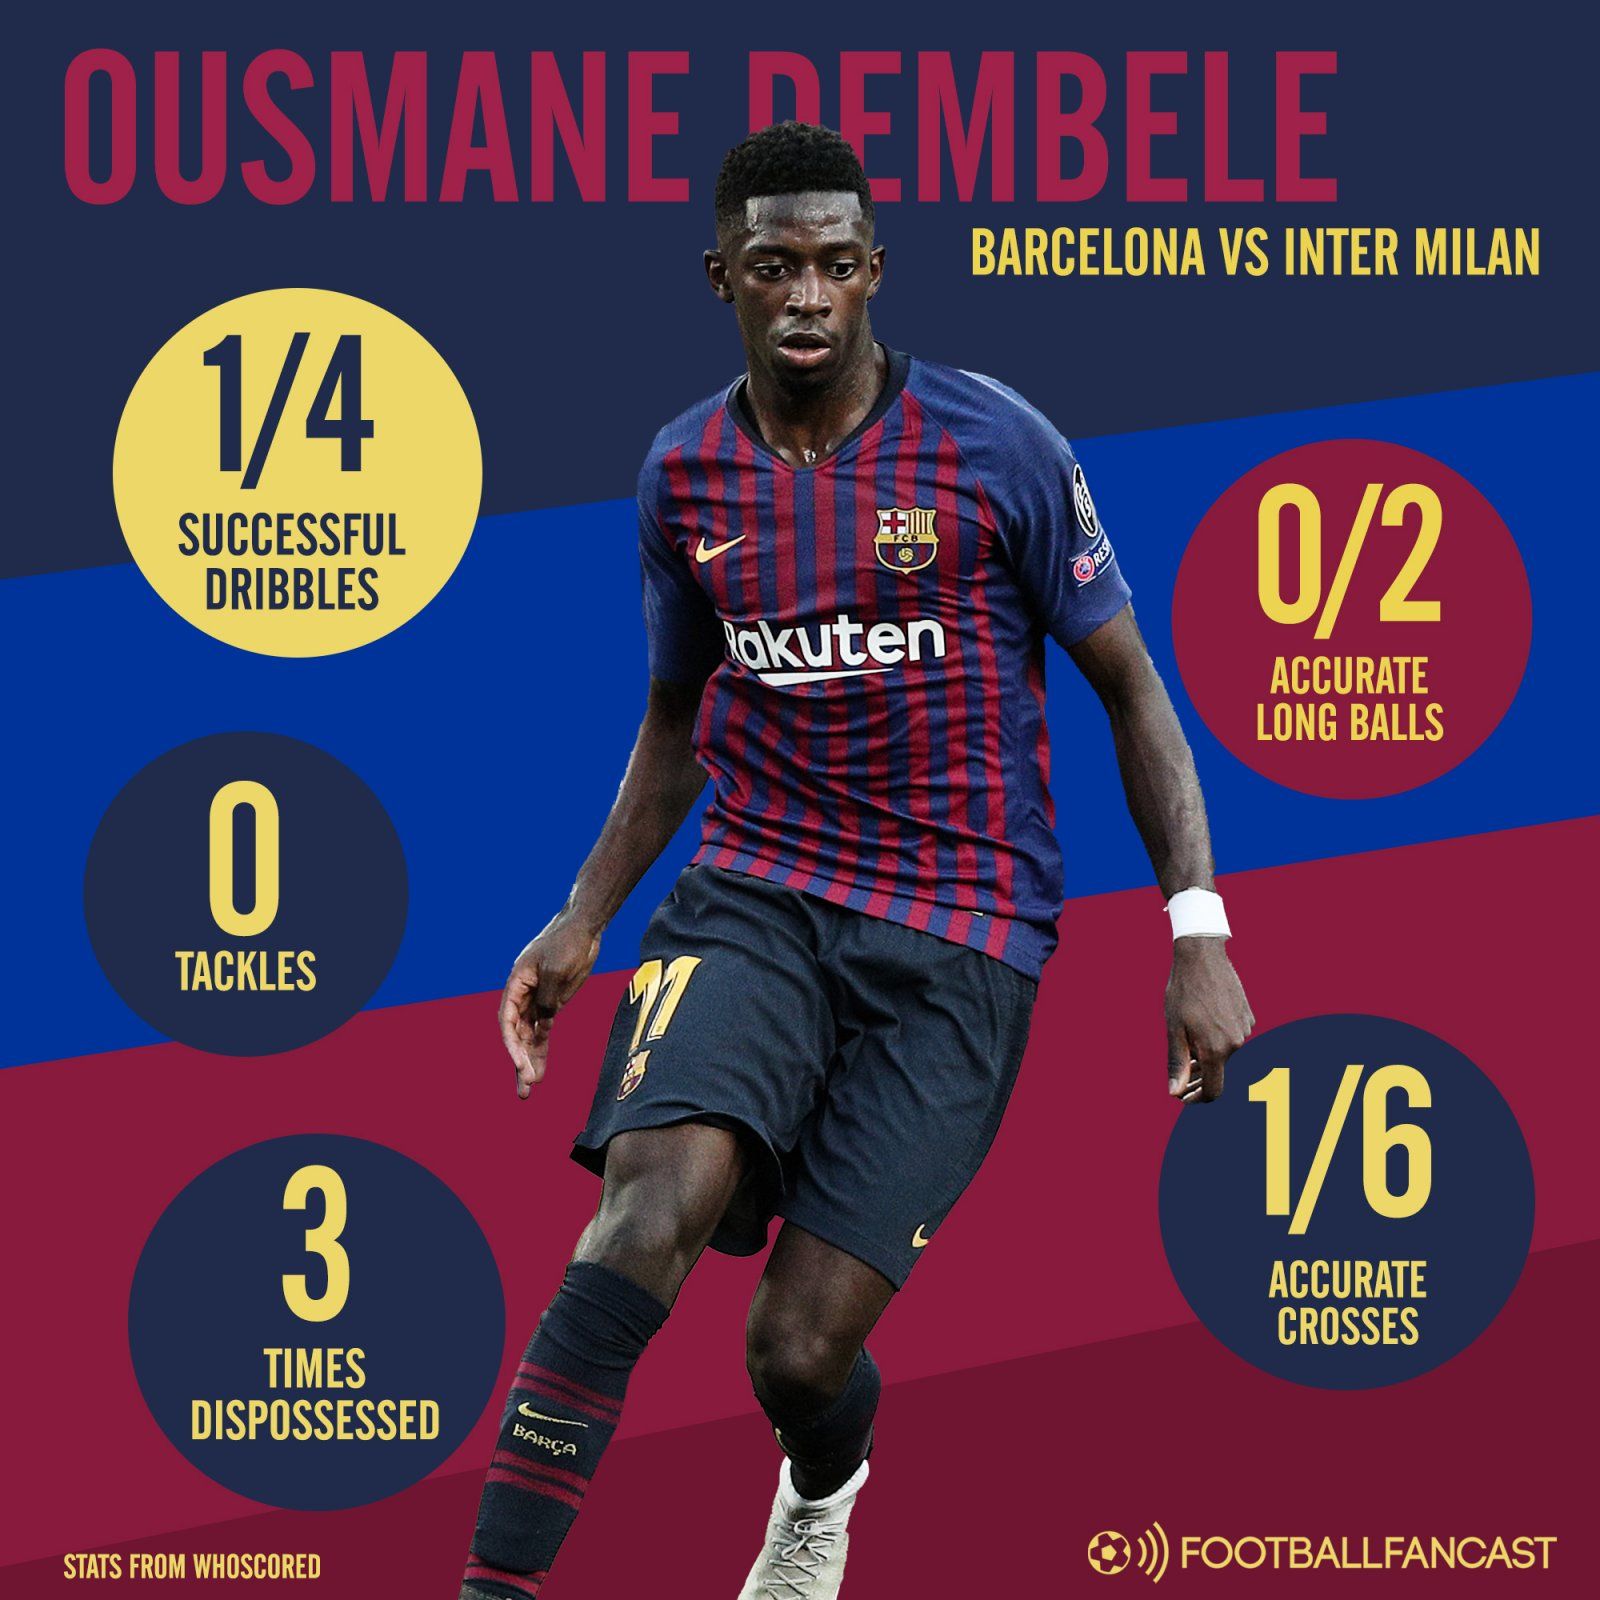 Barcelona attacker Ousmane Dembele's stats vs Inter Milan